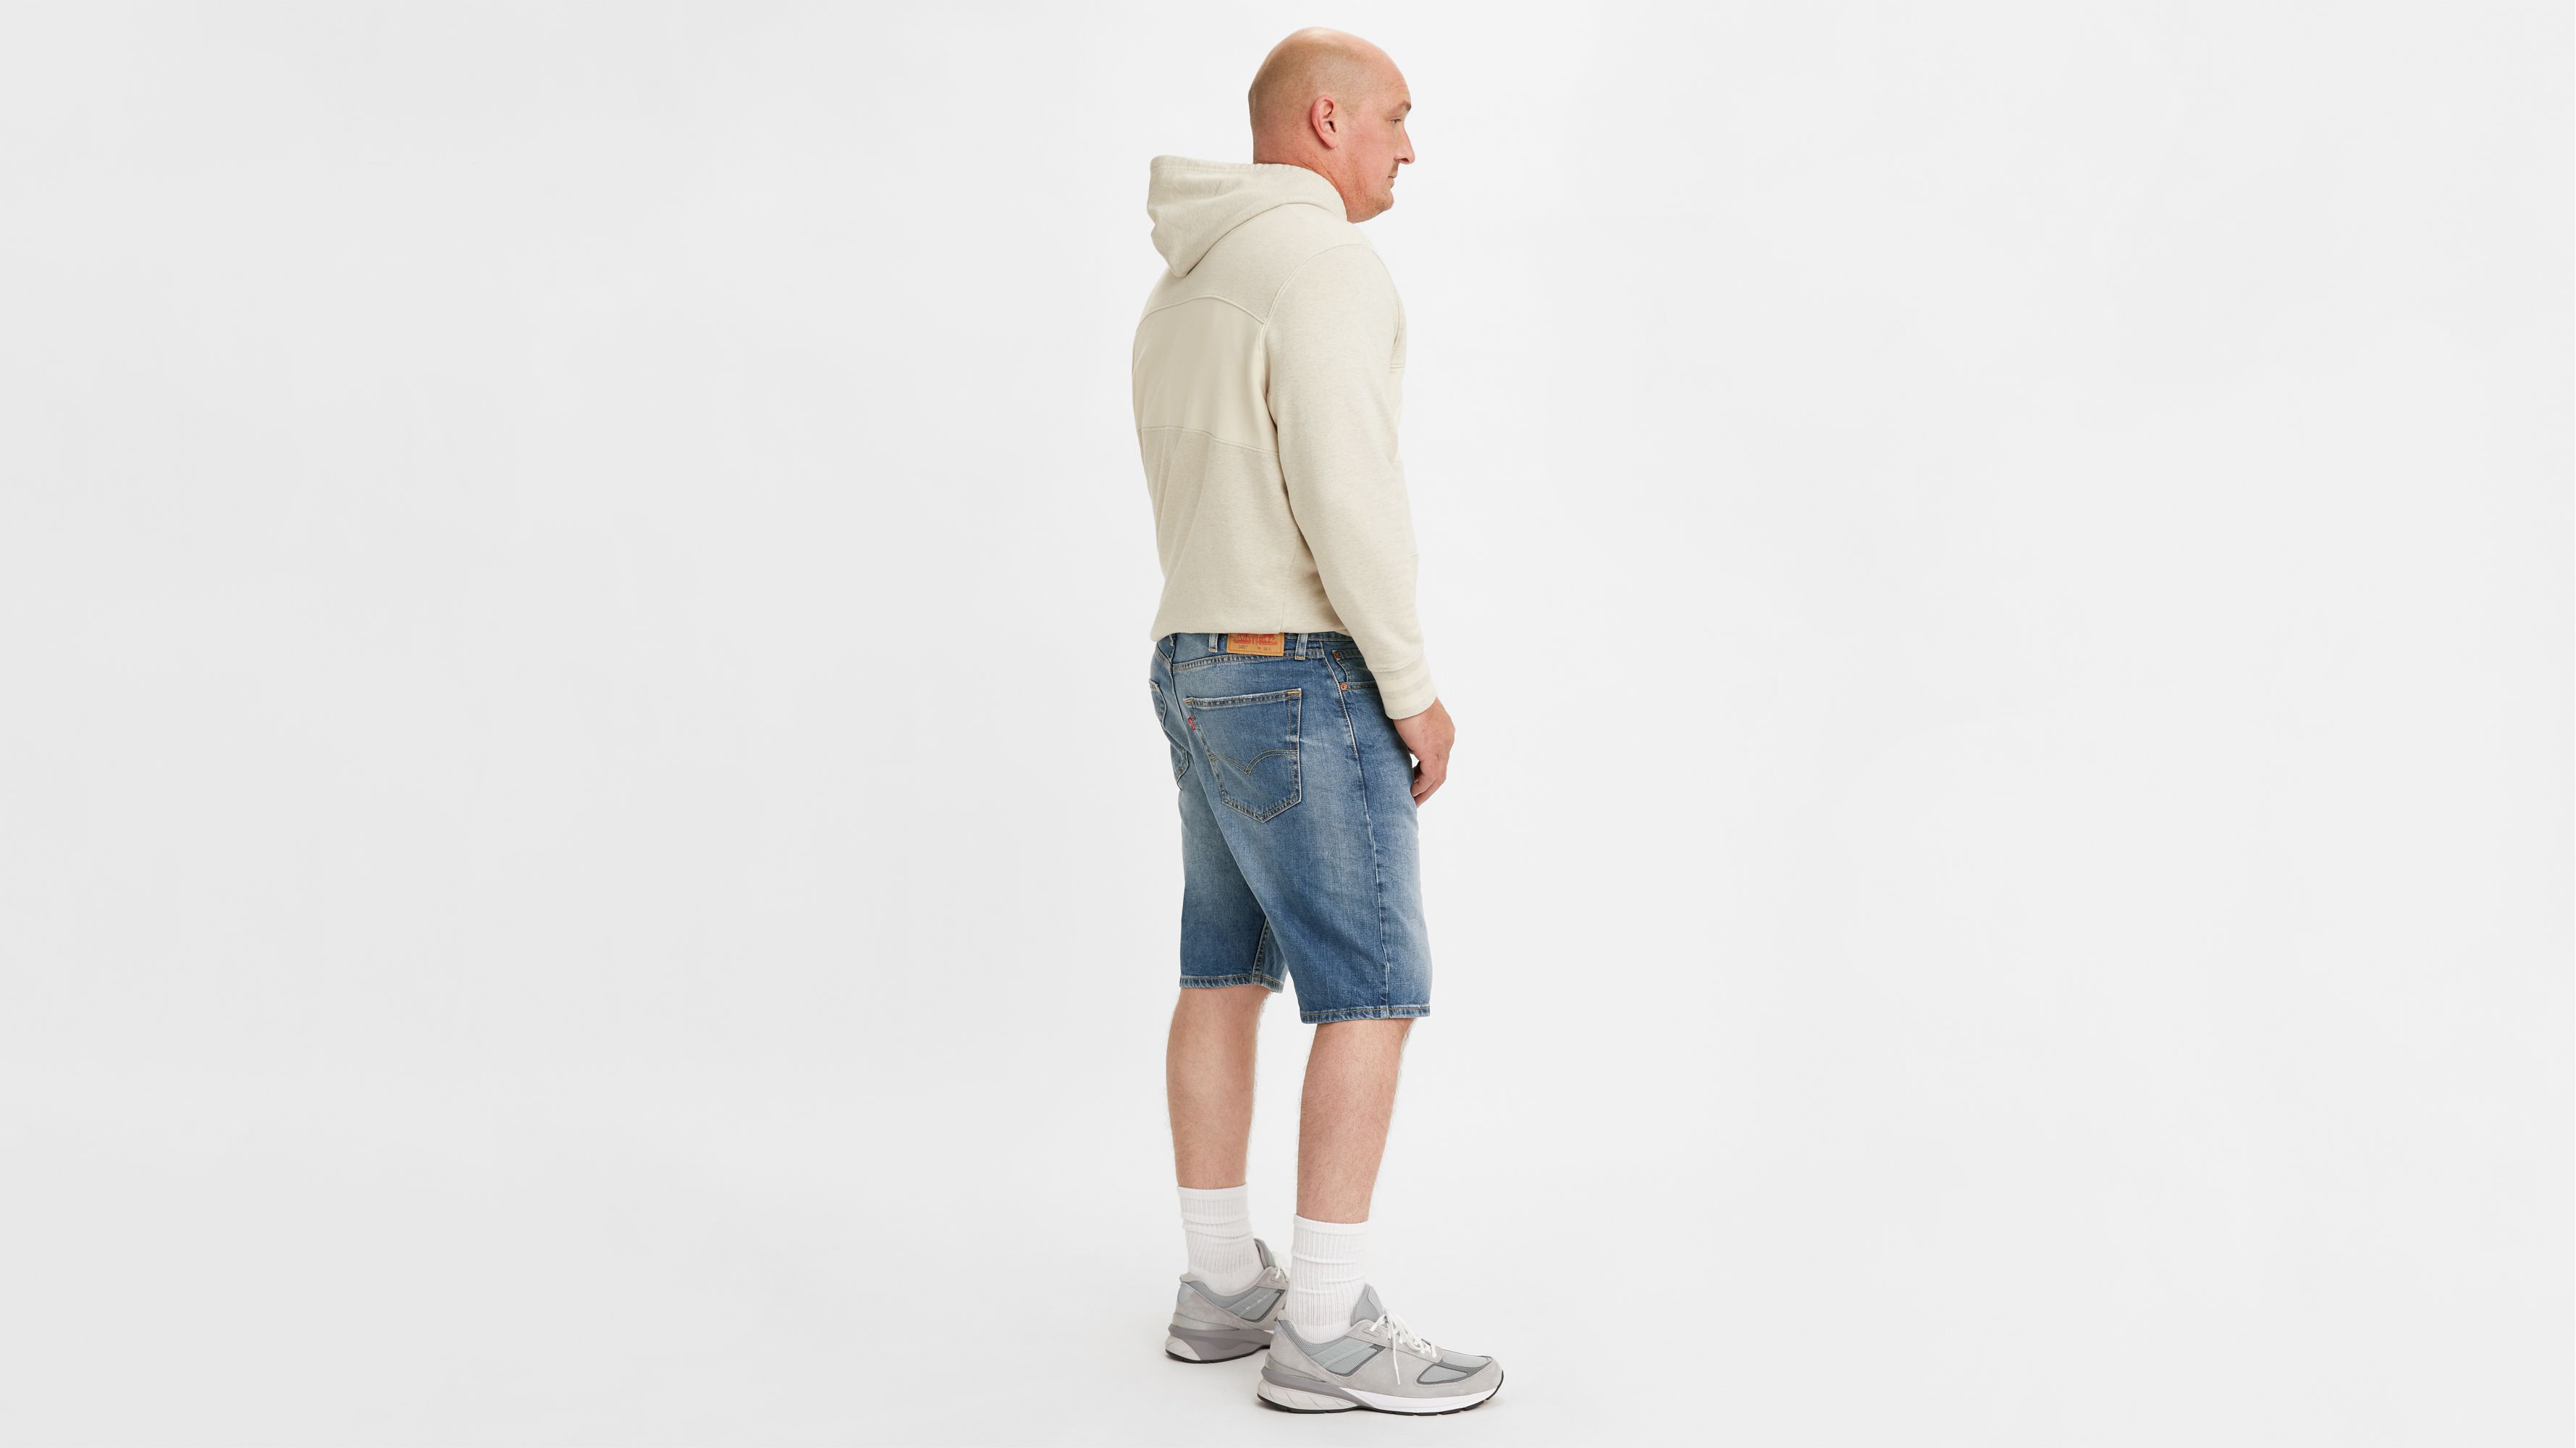 Levi's 469 Loose Jean Men's Shorts - Lazy 31 x 12